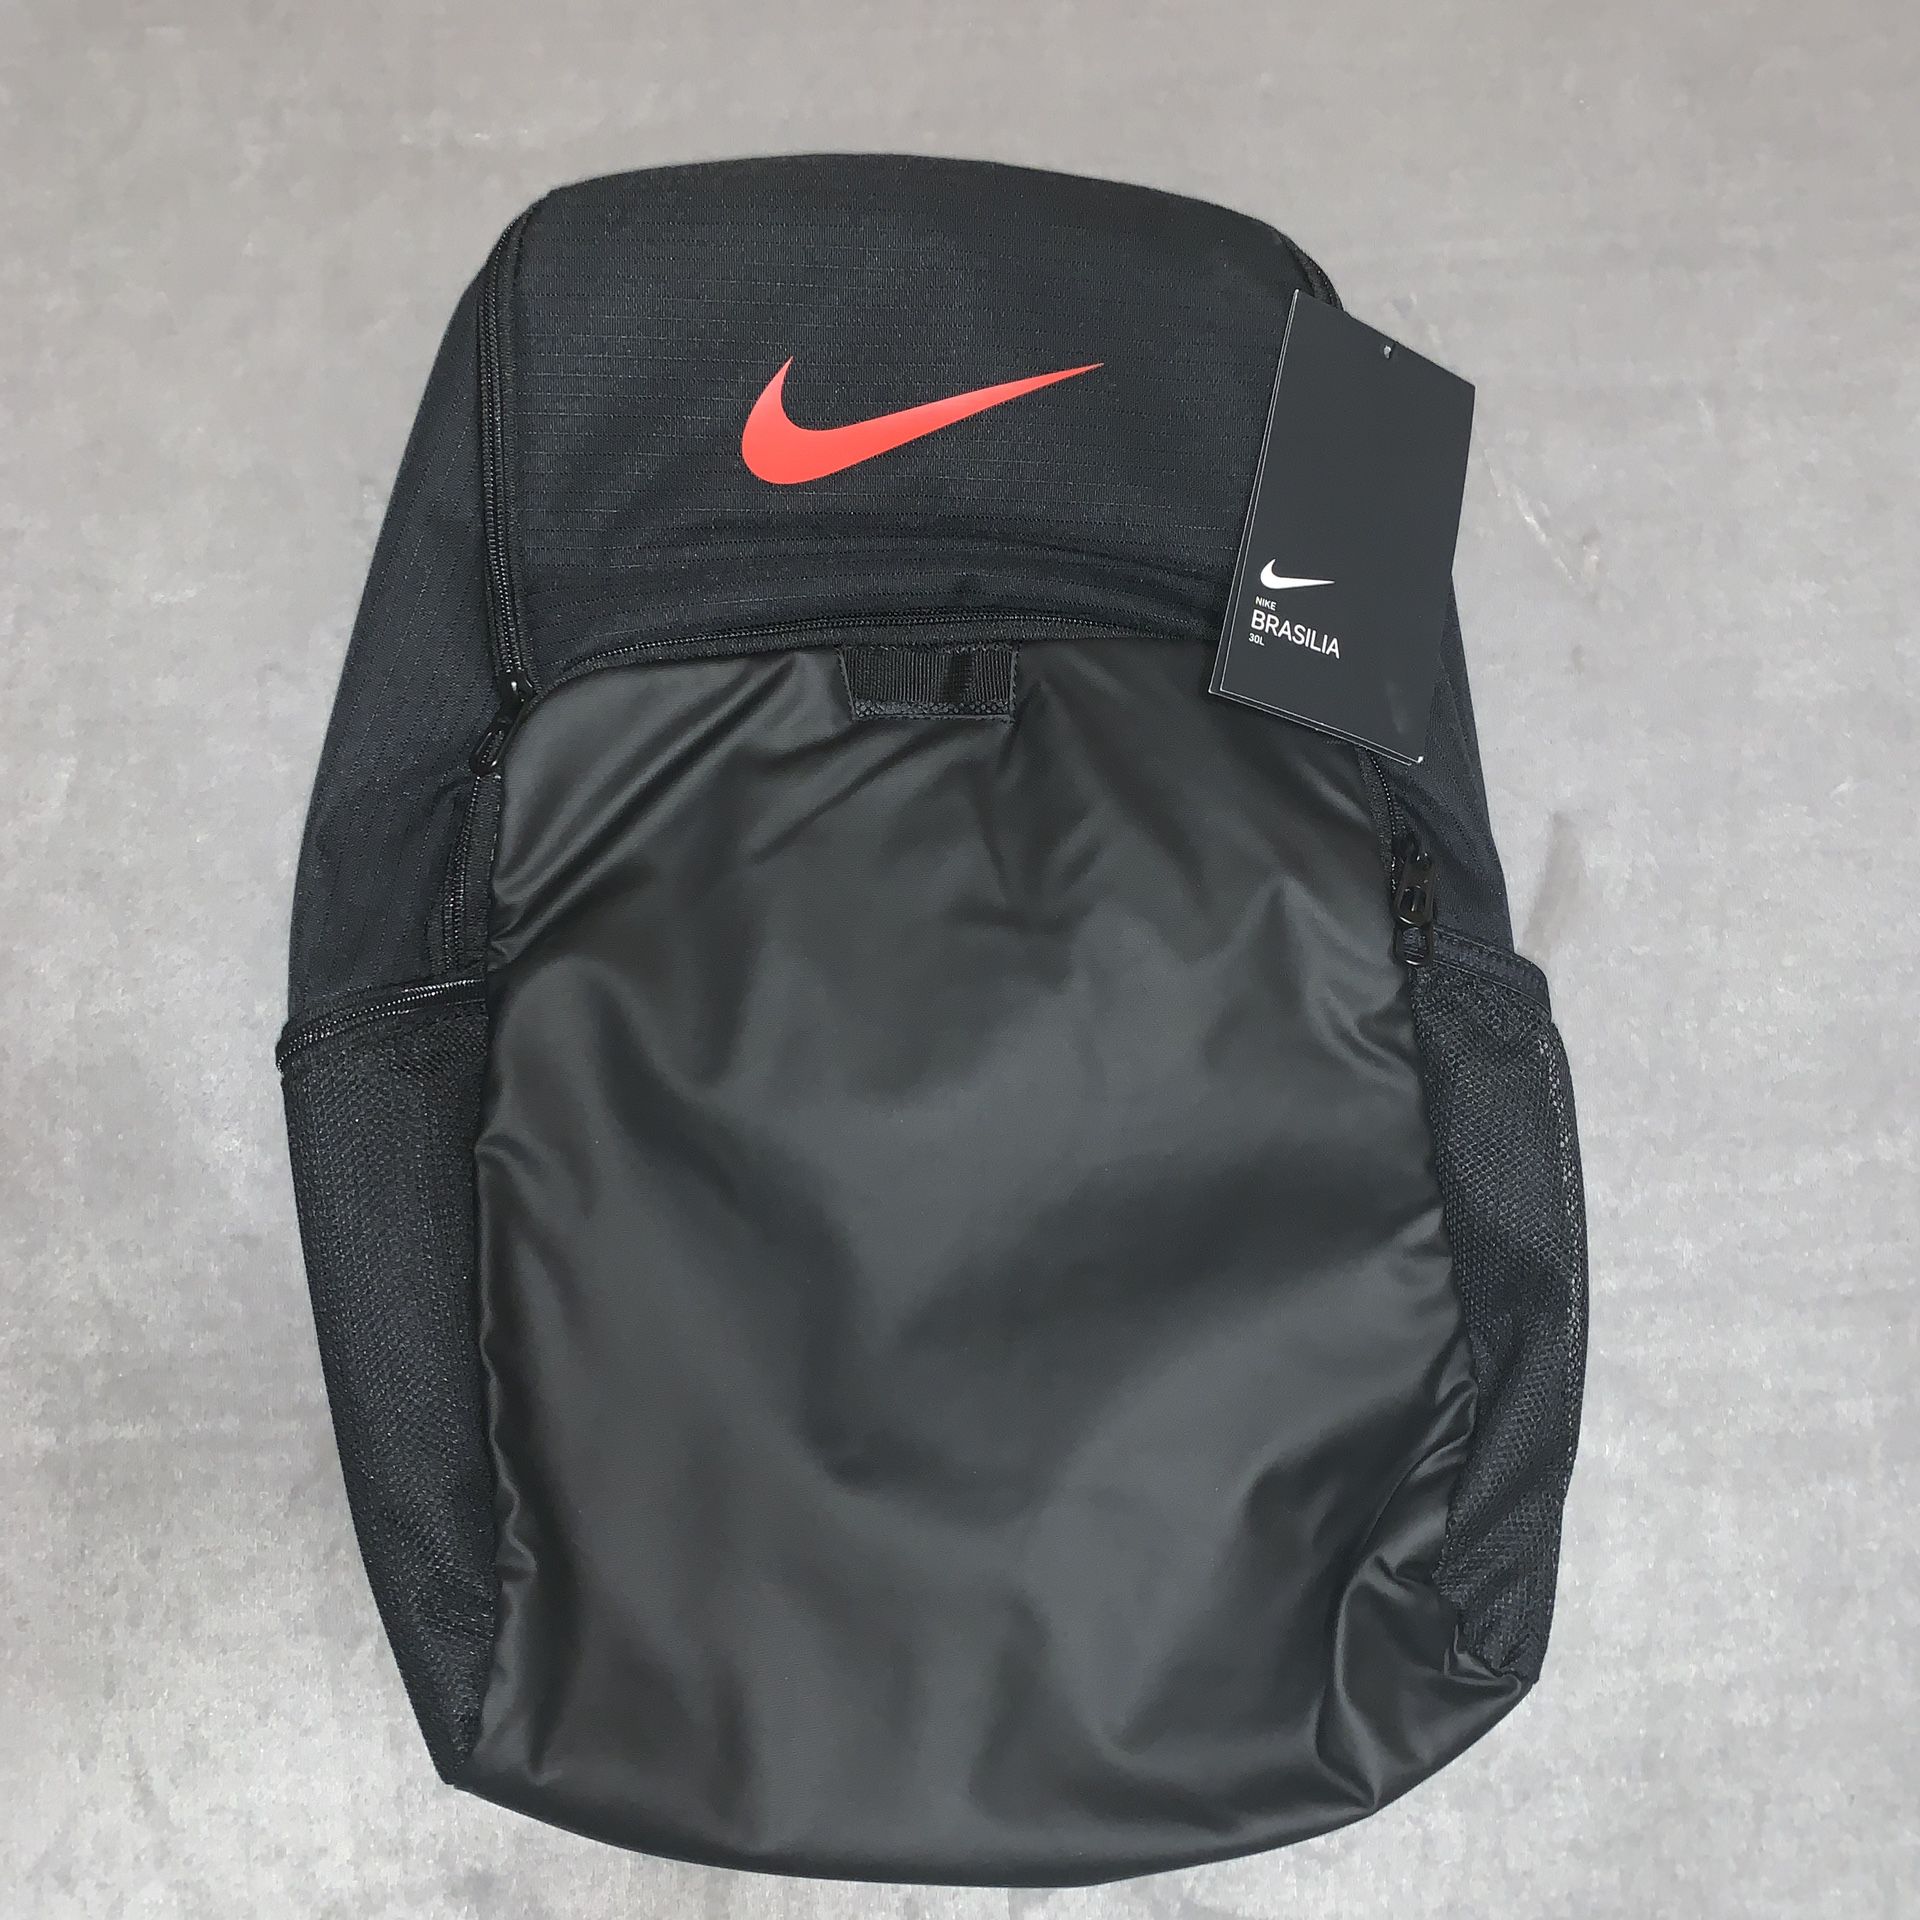 Nike Brasilia X-Large Backpack 30L Sports Bag - Black/University Red - BA5959-01